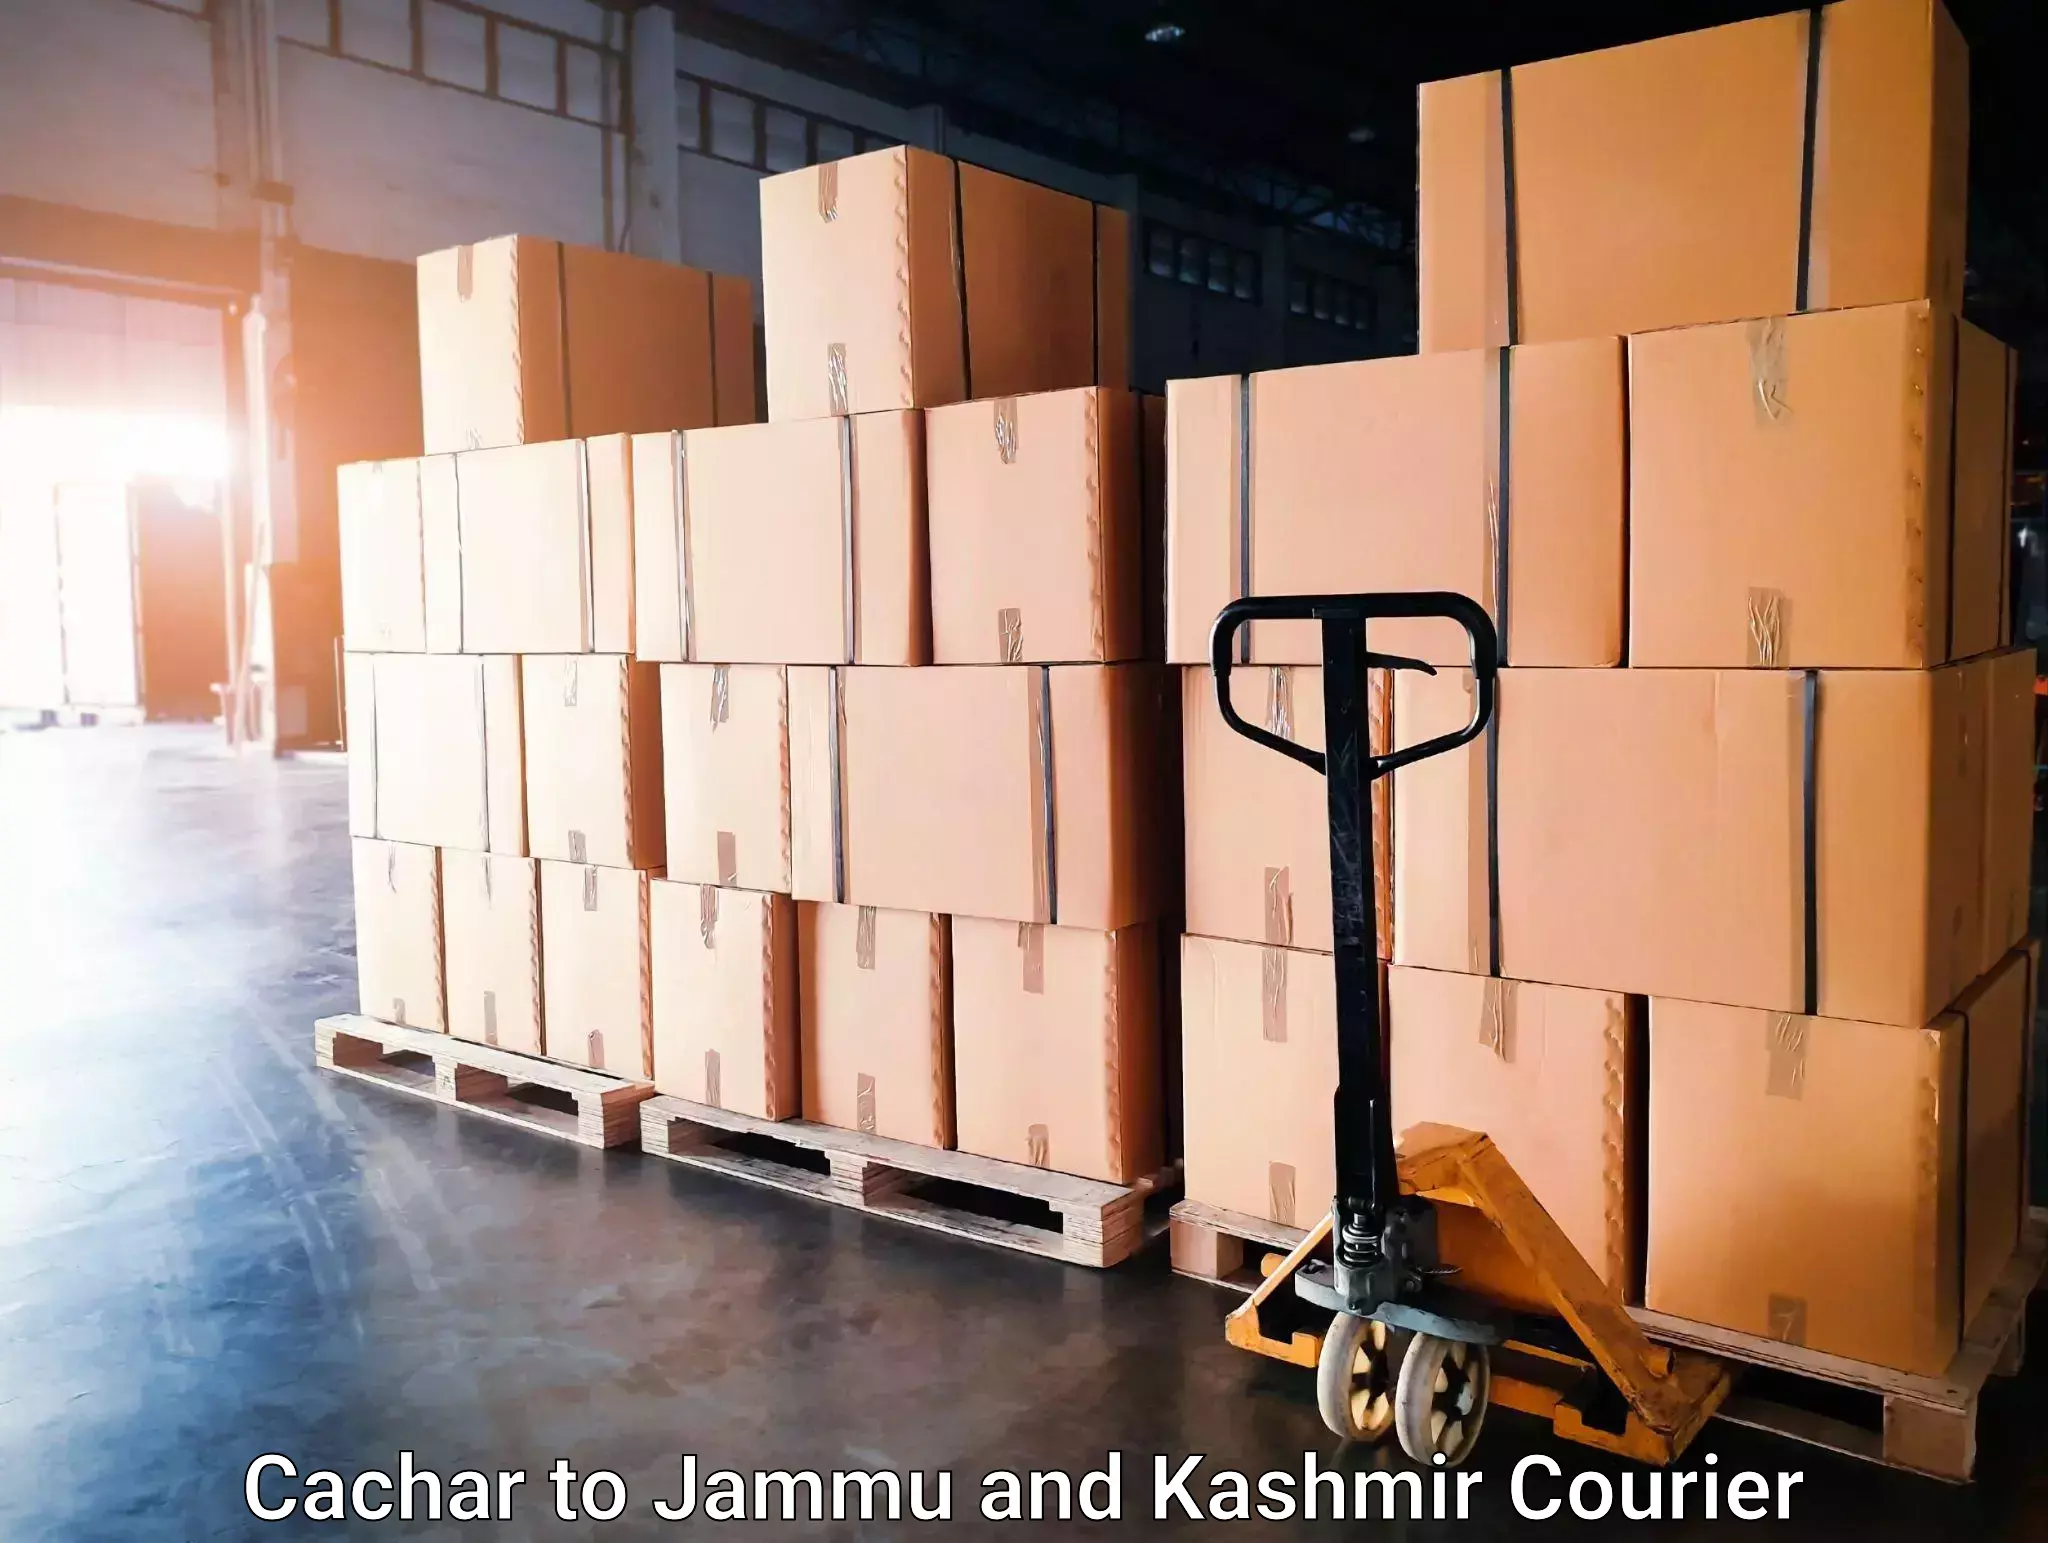 Courier service booking Cachar to Birpur Samba